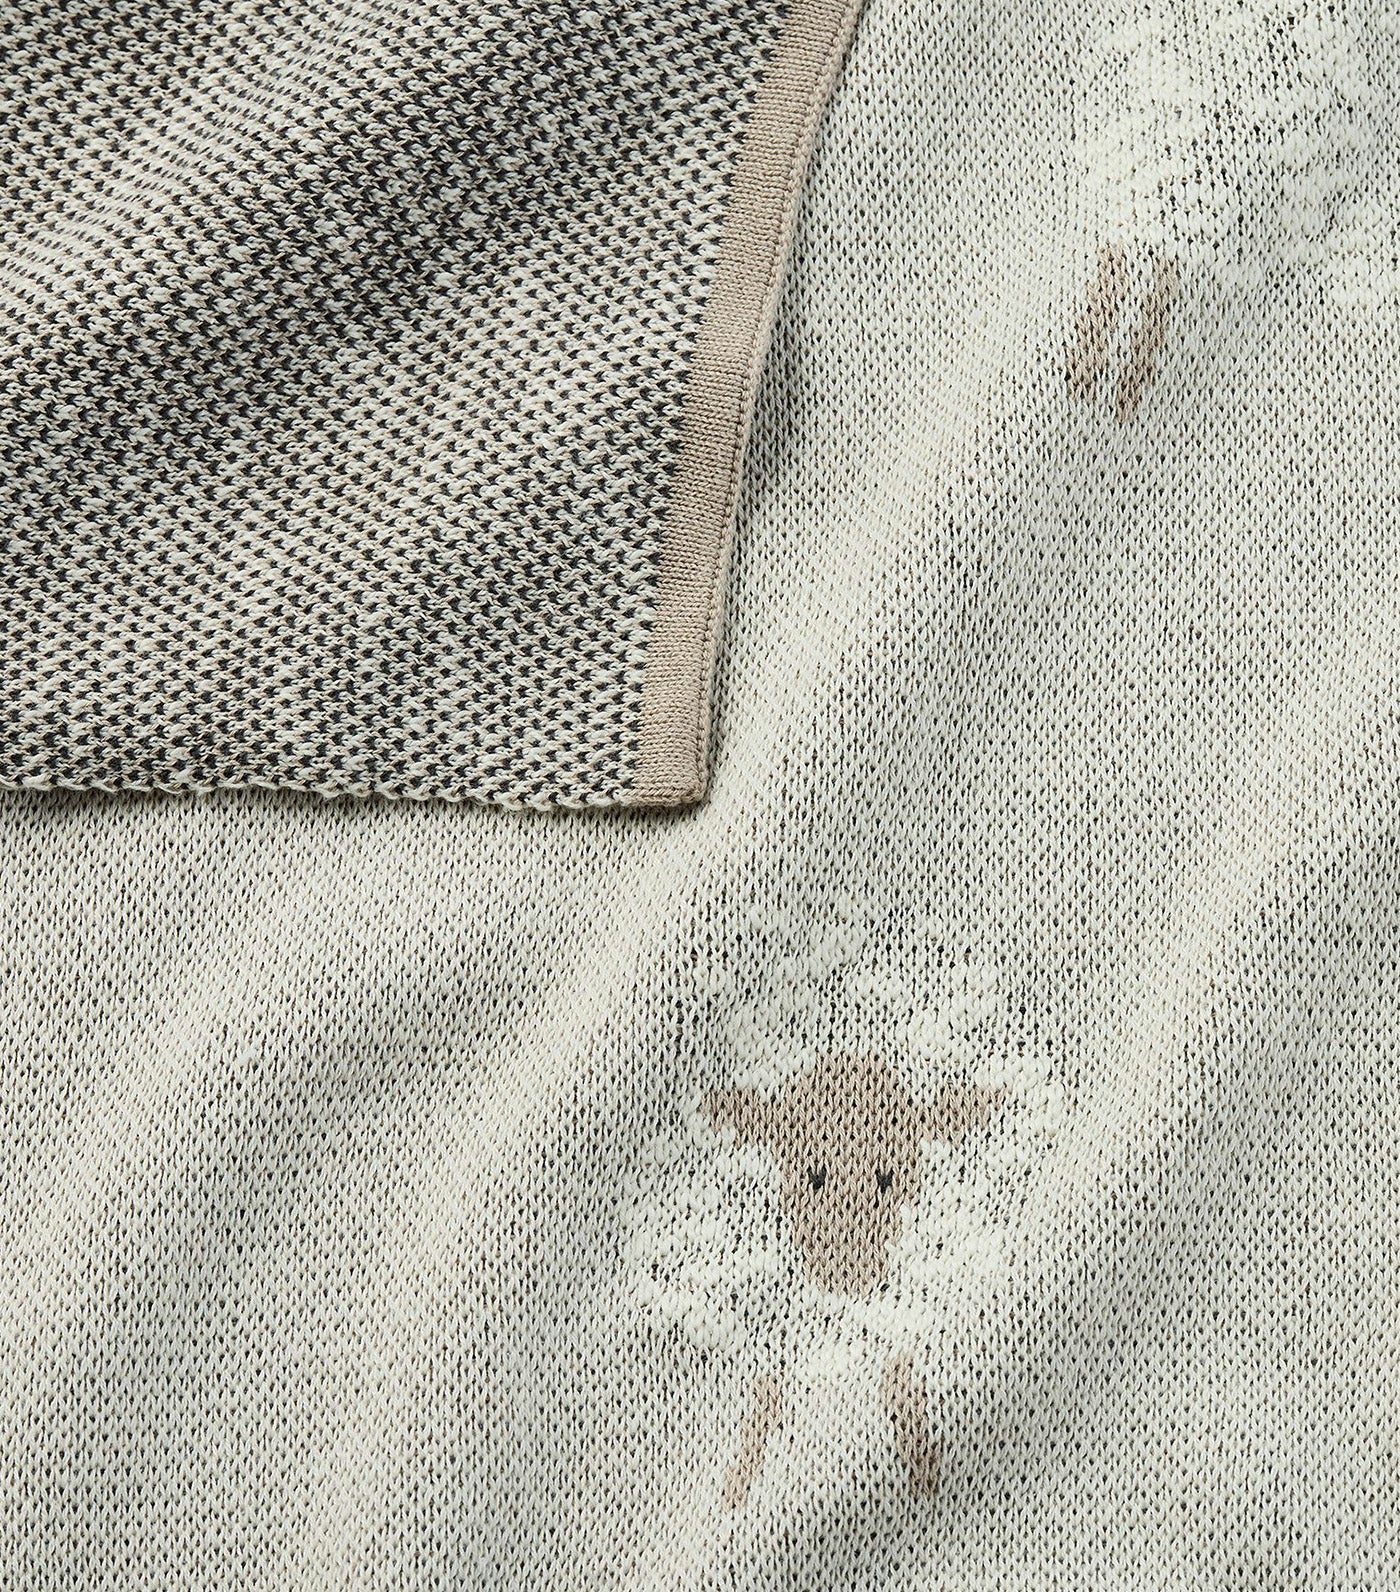 Intarsia Sheep Baby Blanket